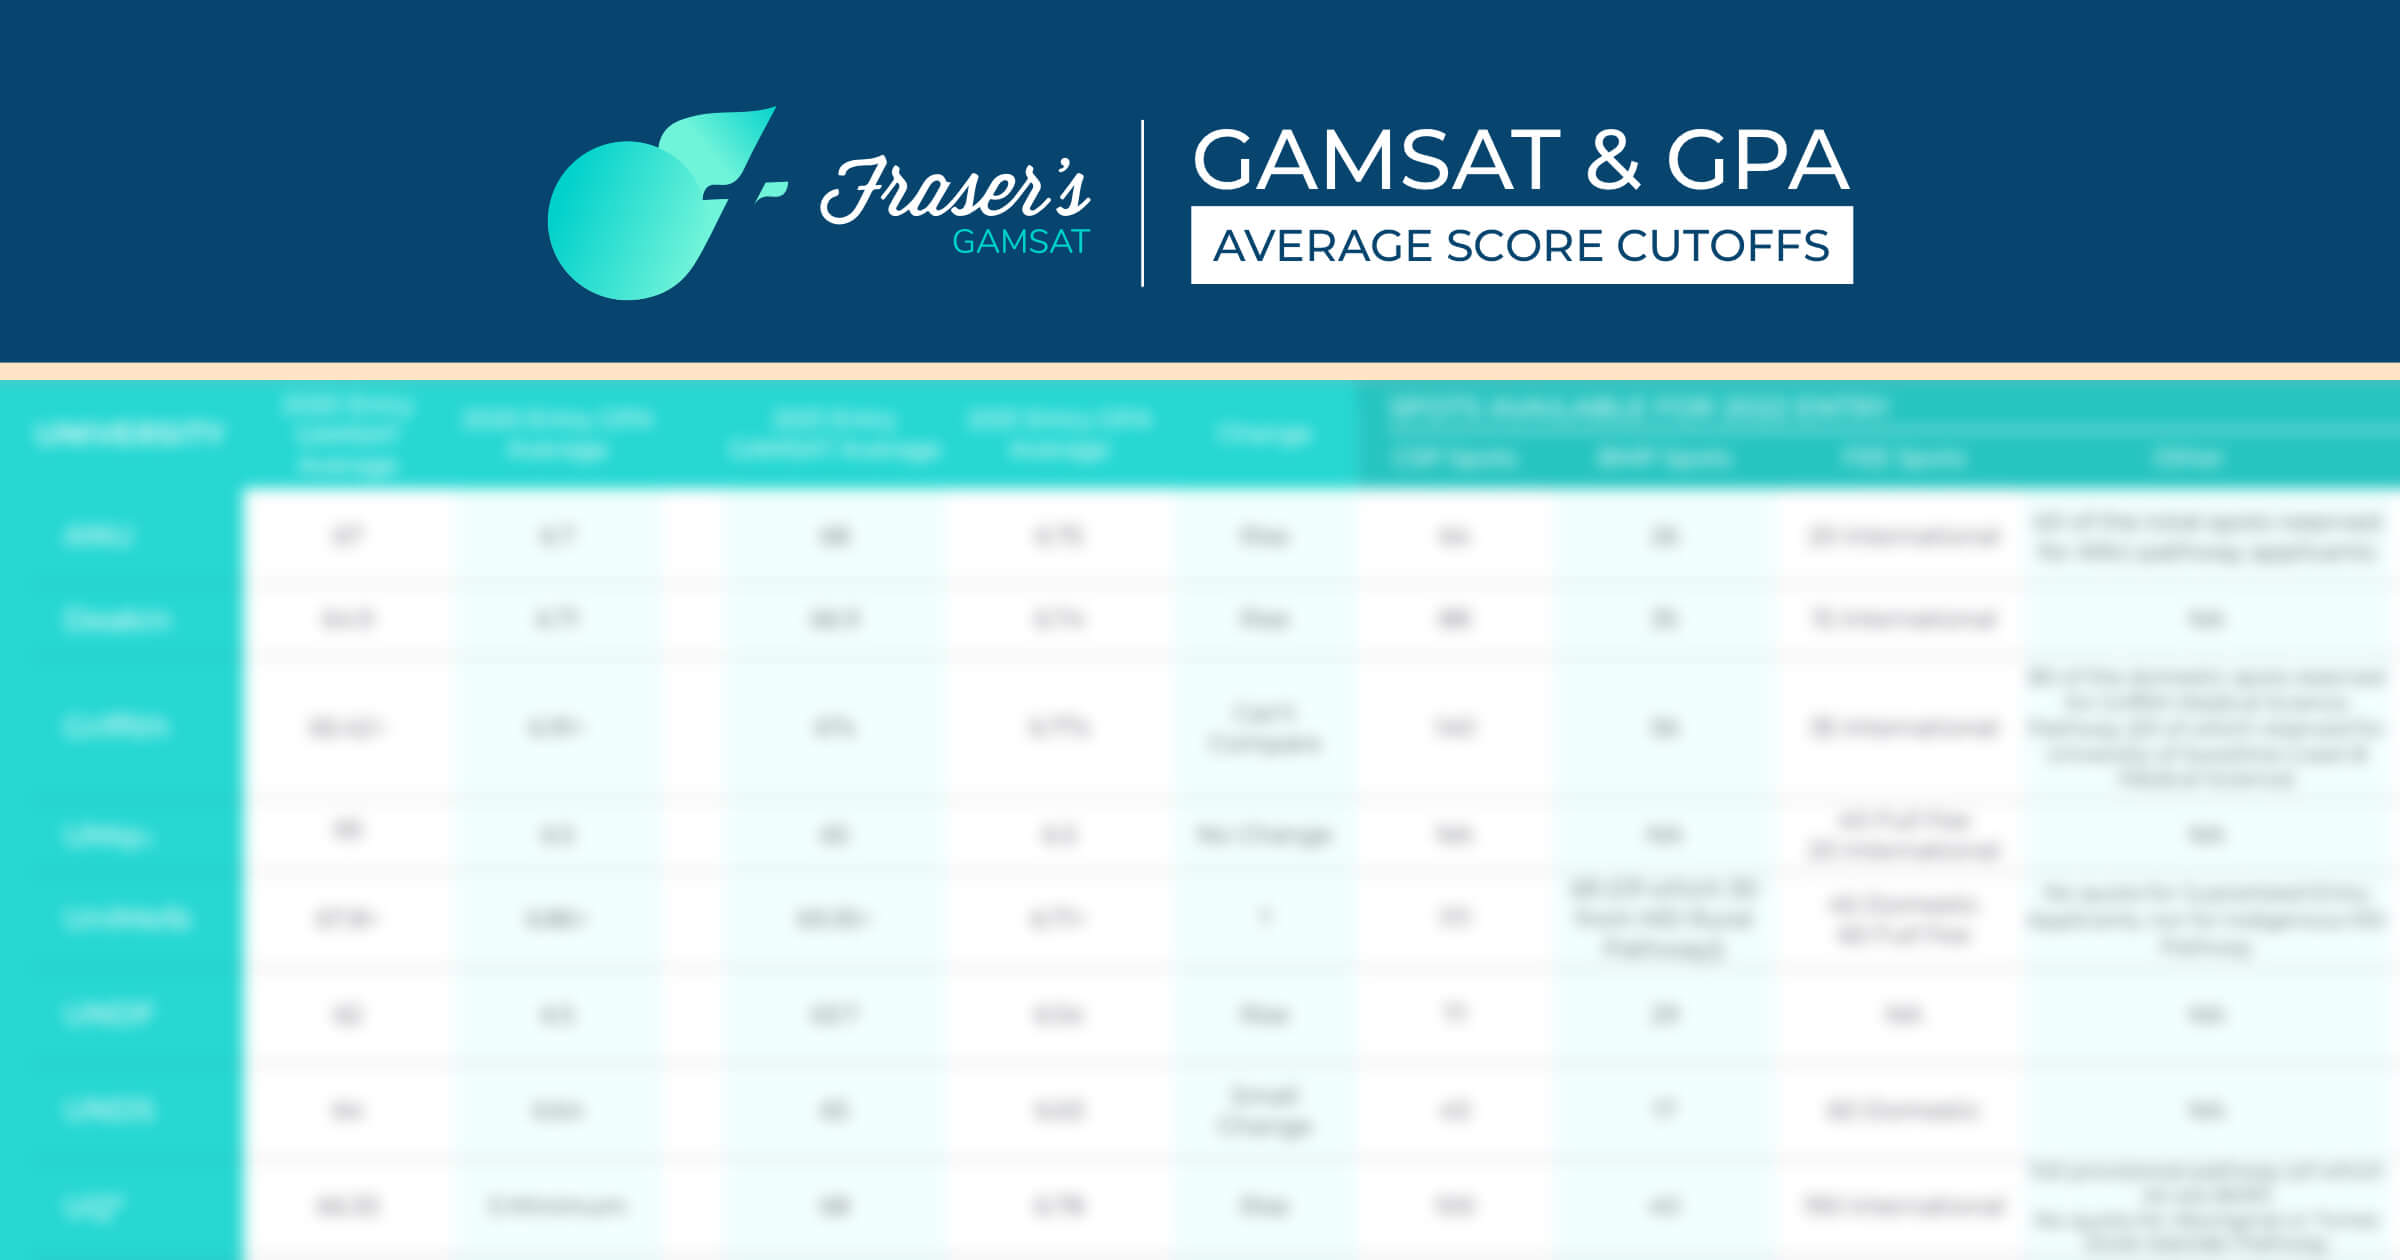 GAMSAT & GPA Average Score Cutoffs featured image